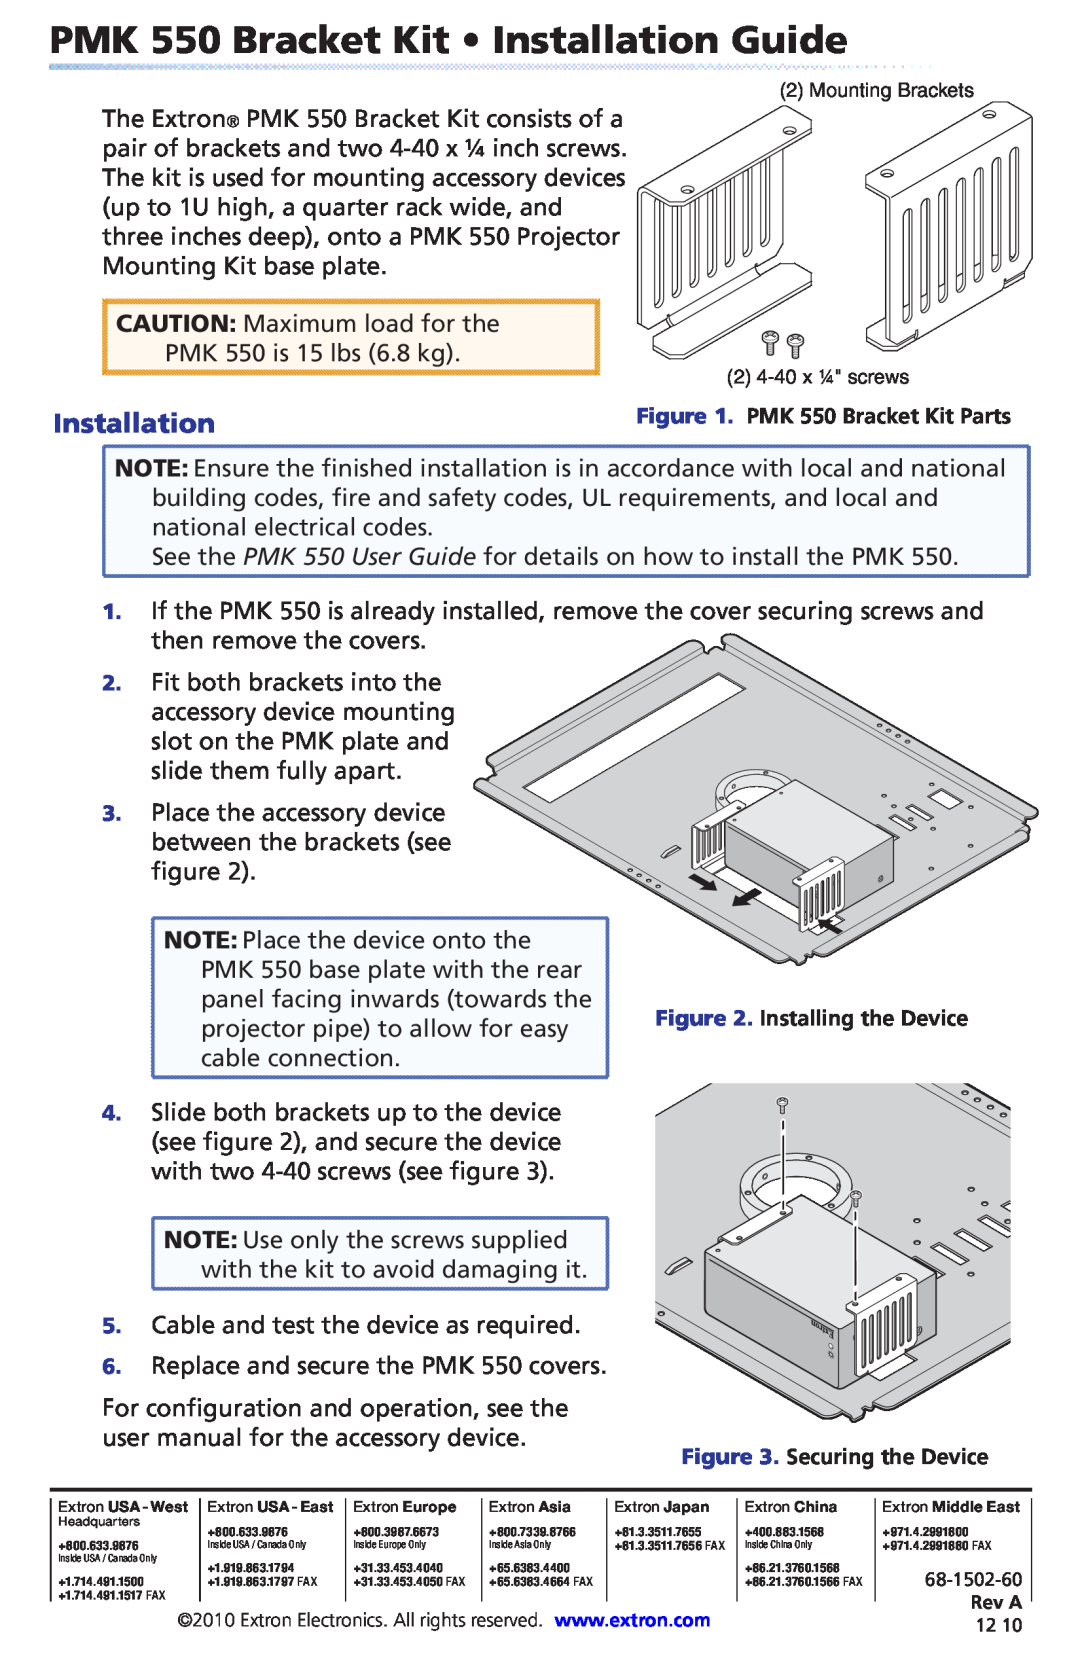 Extron electronic user manual PMK 550 Bracket Kit Installation Guide 